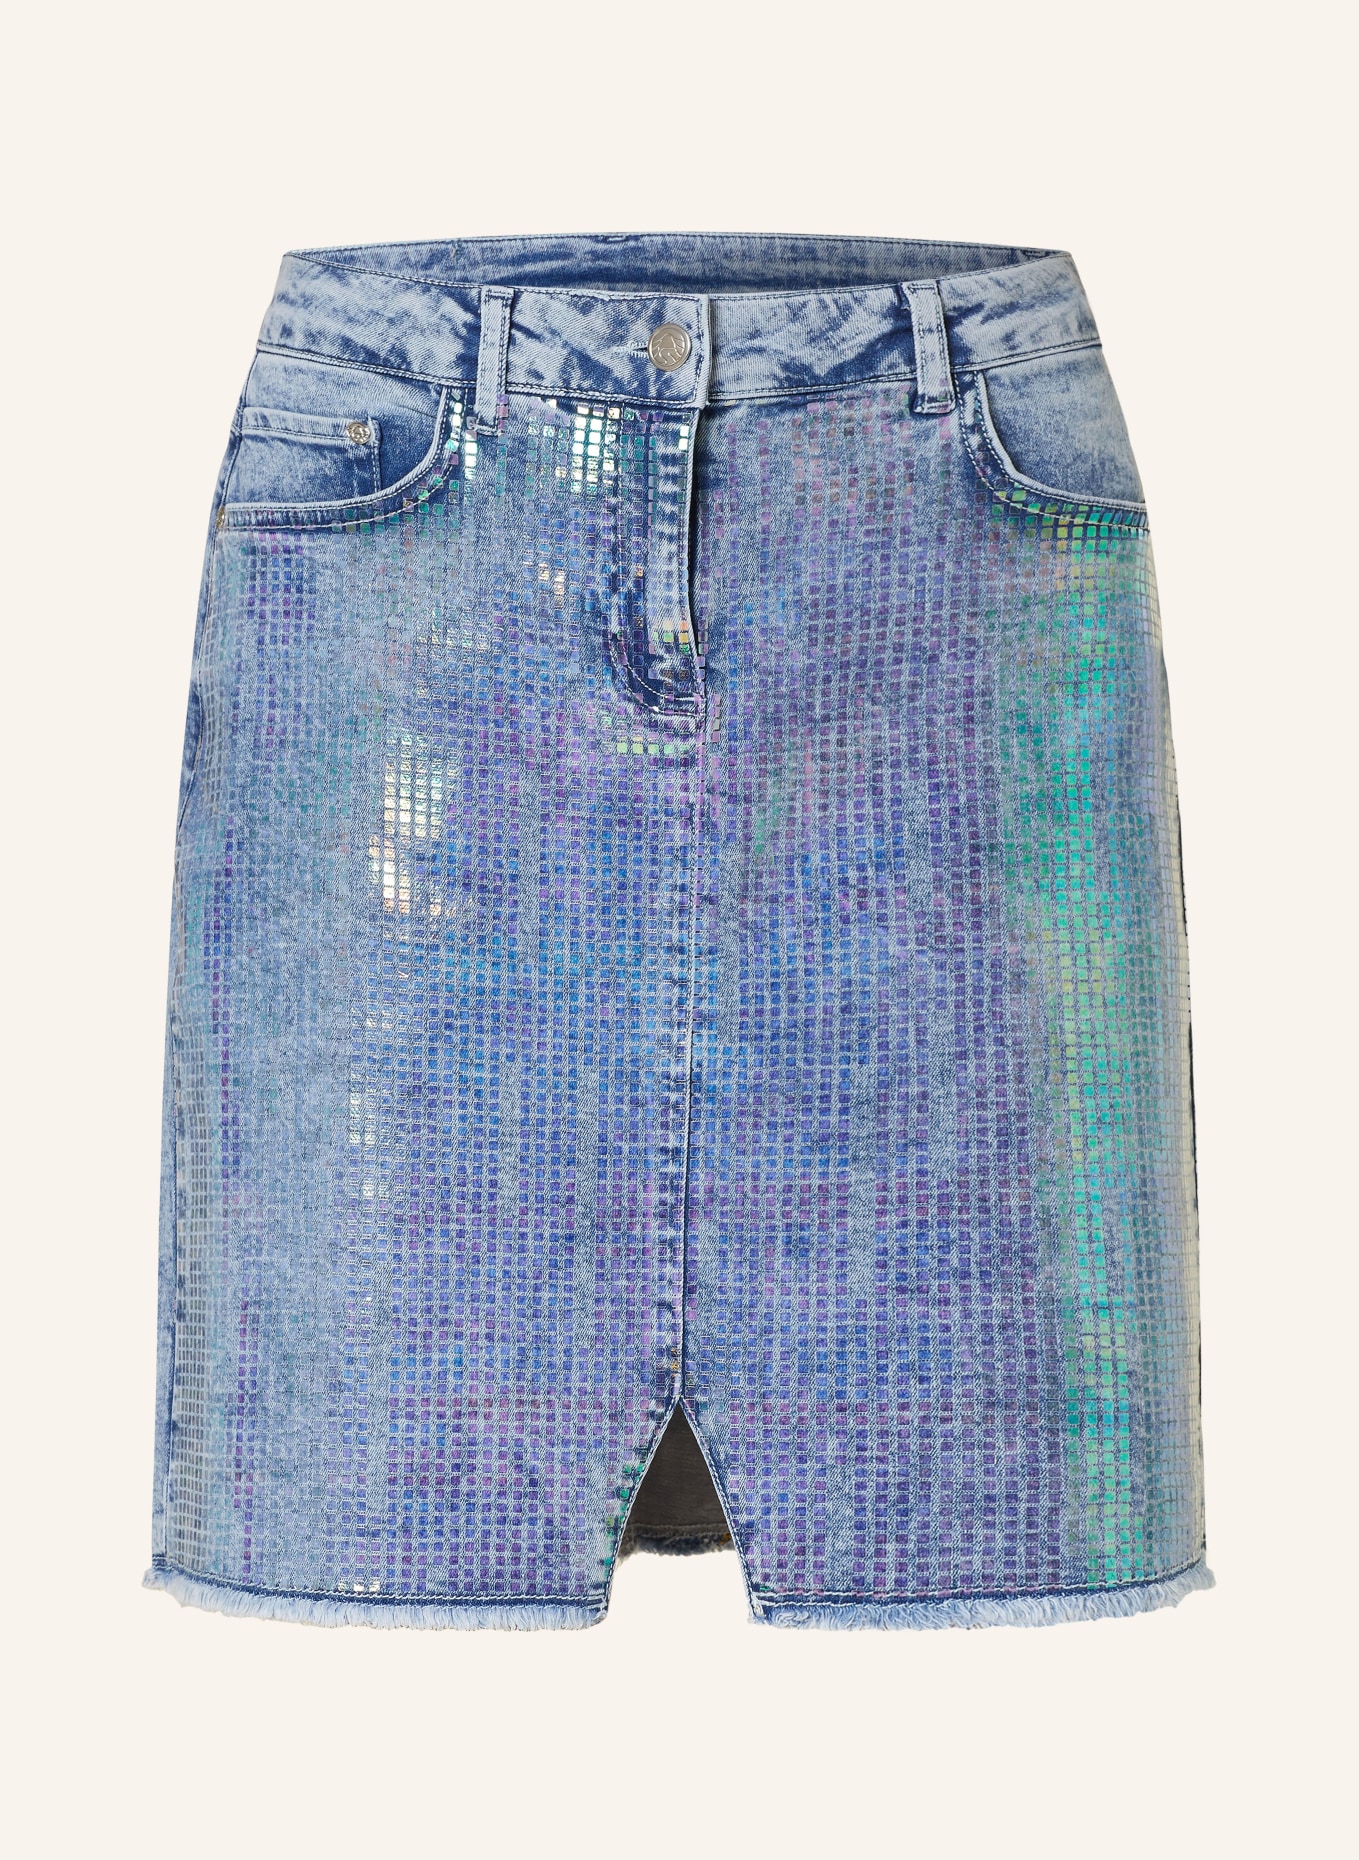 ULLI EHRLICH SPORTALM Denim skirt, Color: 20 Pearl River (Image 1)